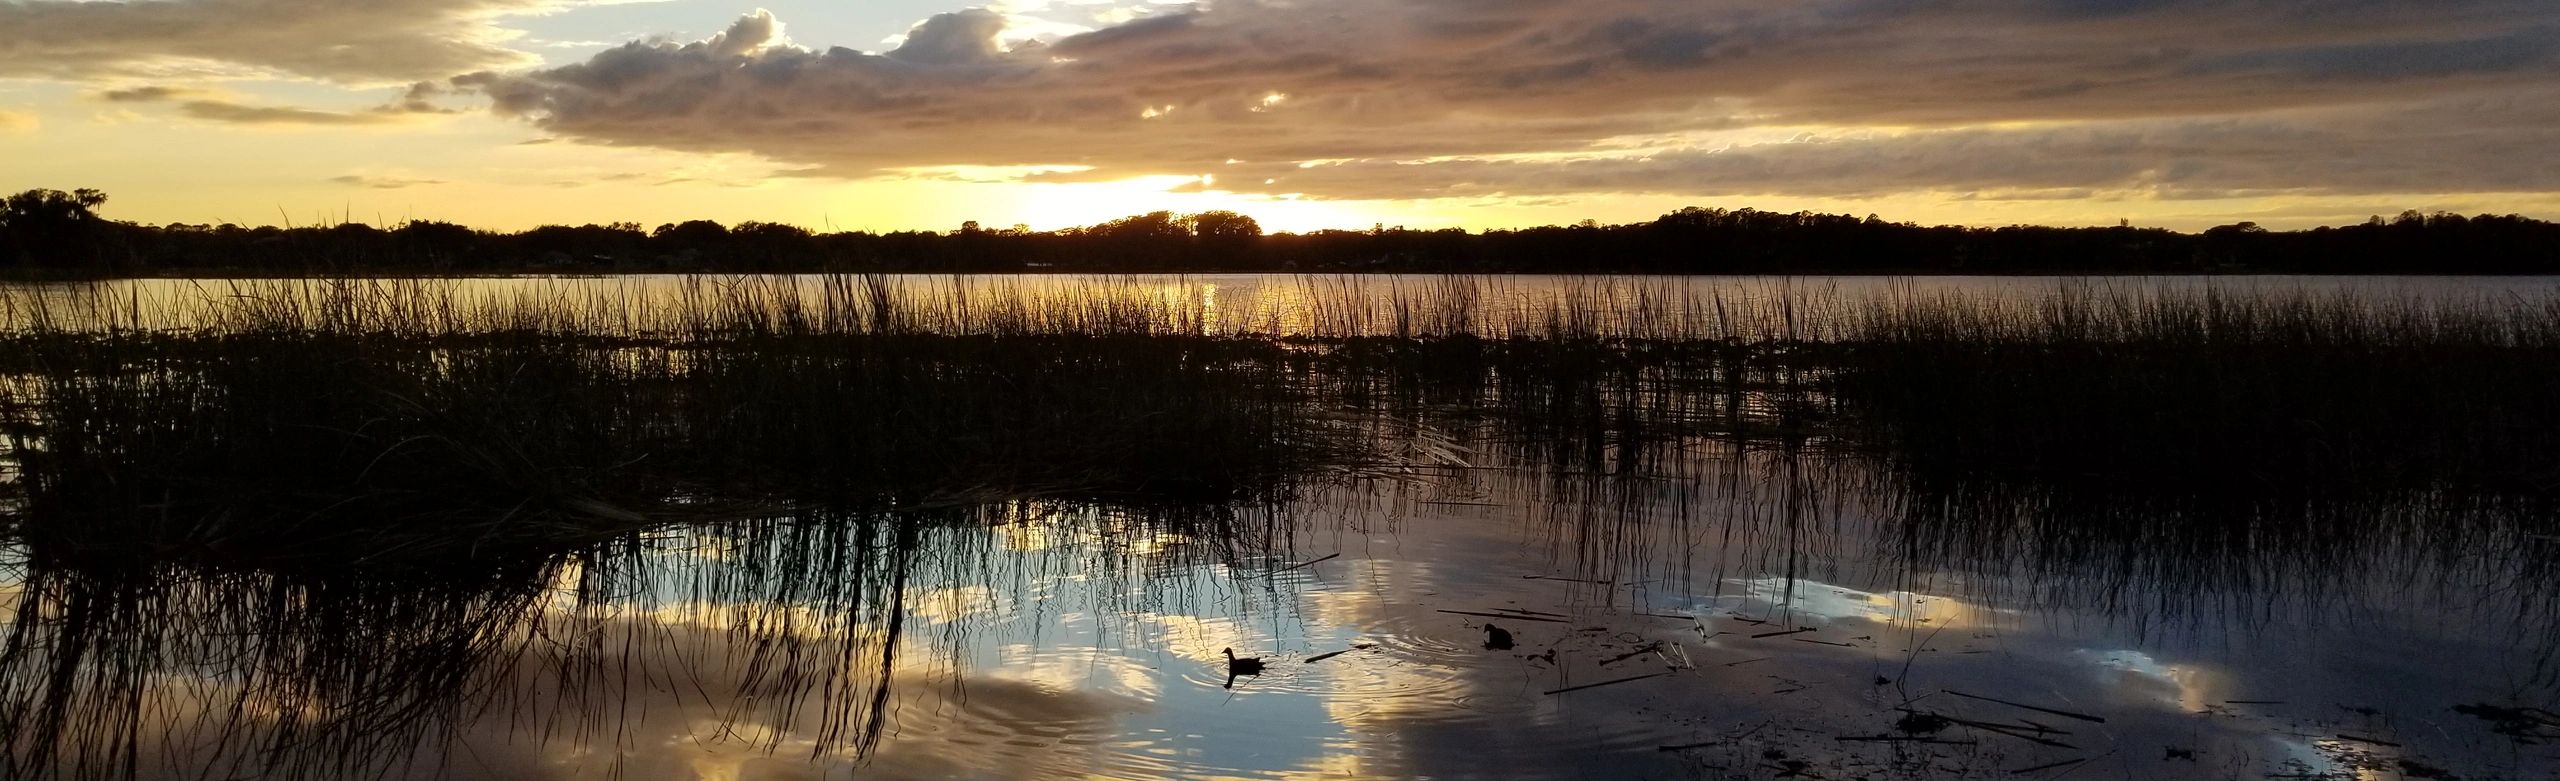 John Chesnut Park, Palm Harbor, Florida - Sunset Panorama Photo